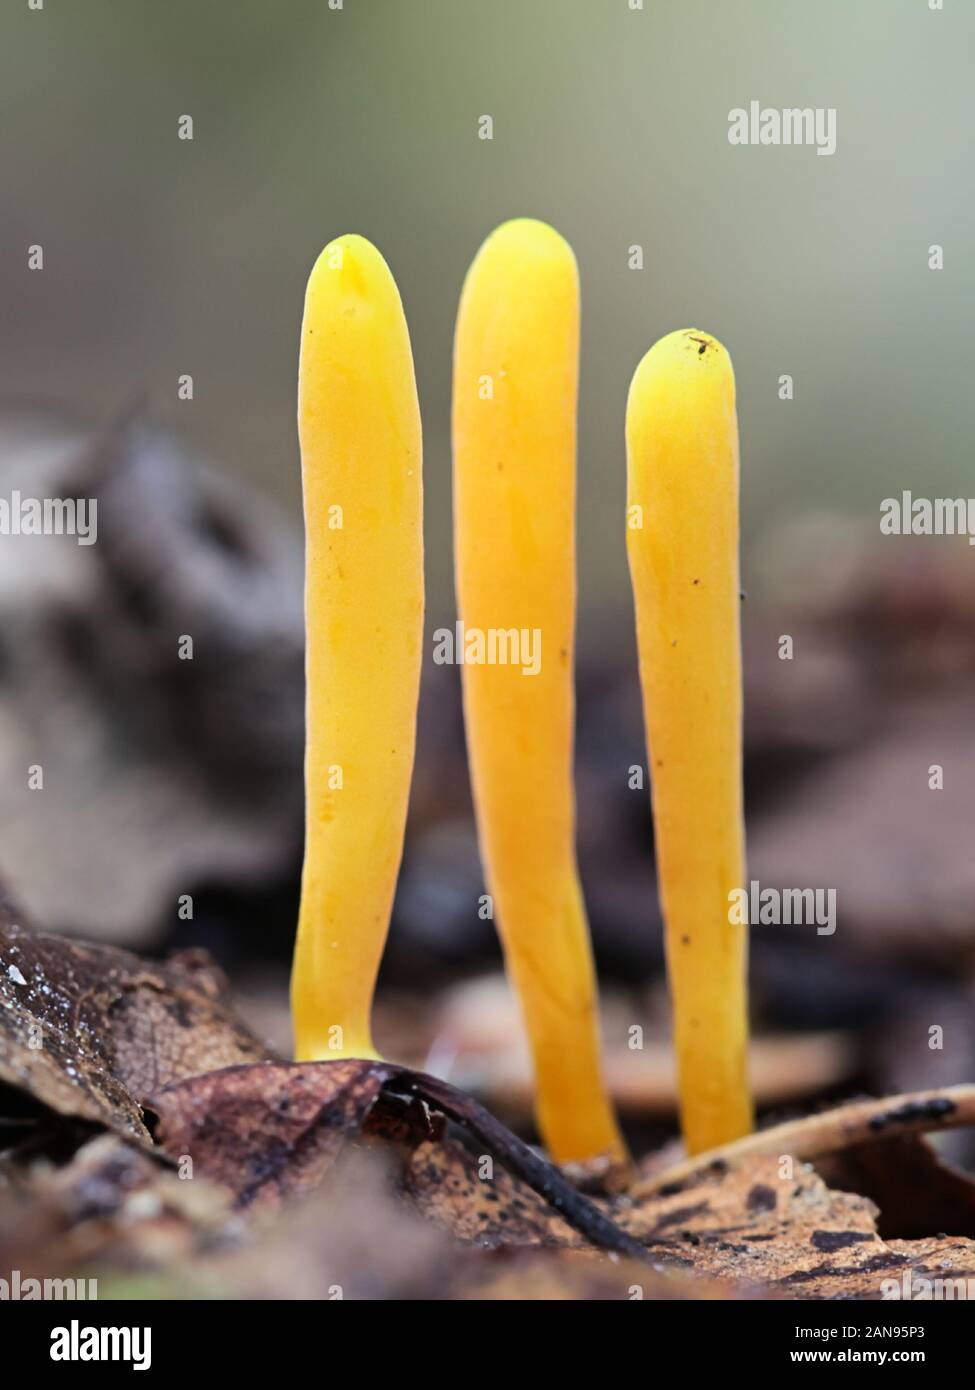 Clavulinopsis helvola, golden club fungus, wild mushrooms from Finland Stock Photo